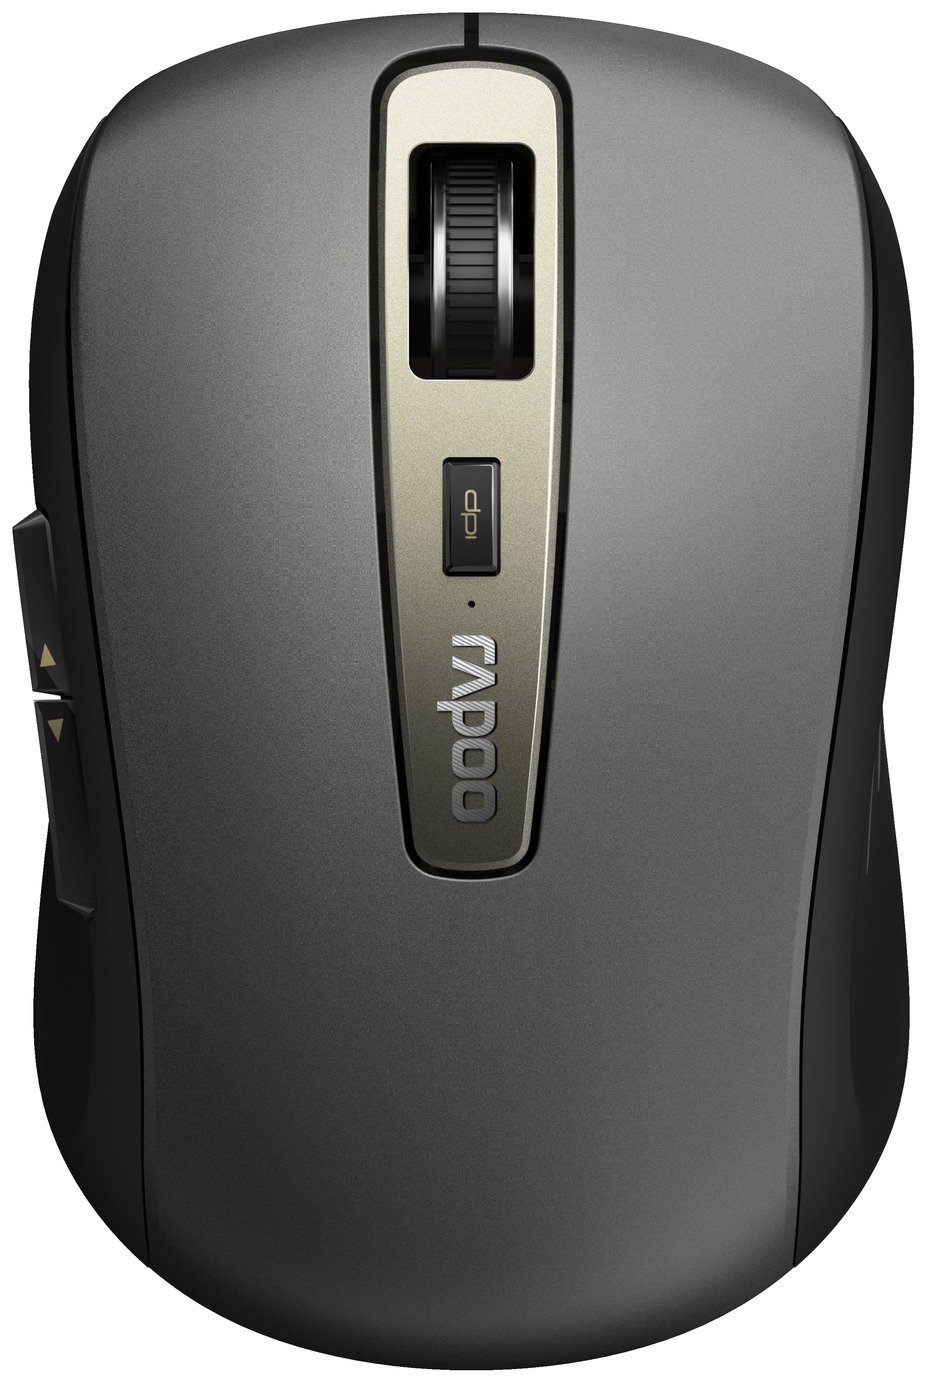 Rapoo MT350 Multi-Mode Optical Wireless Mouse - Black